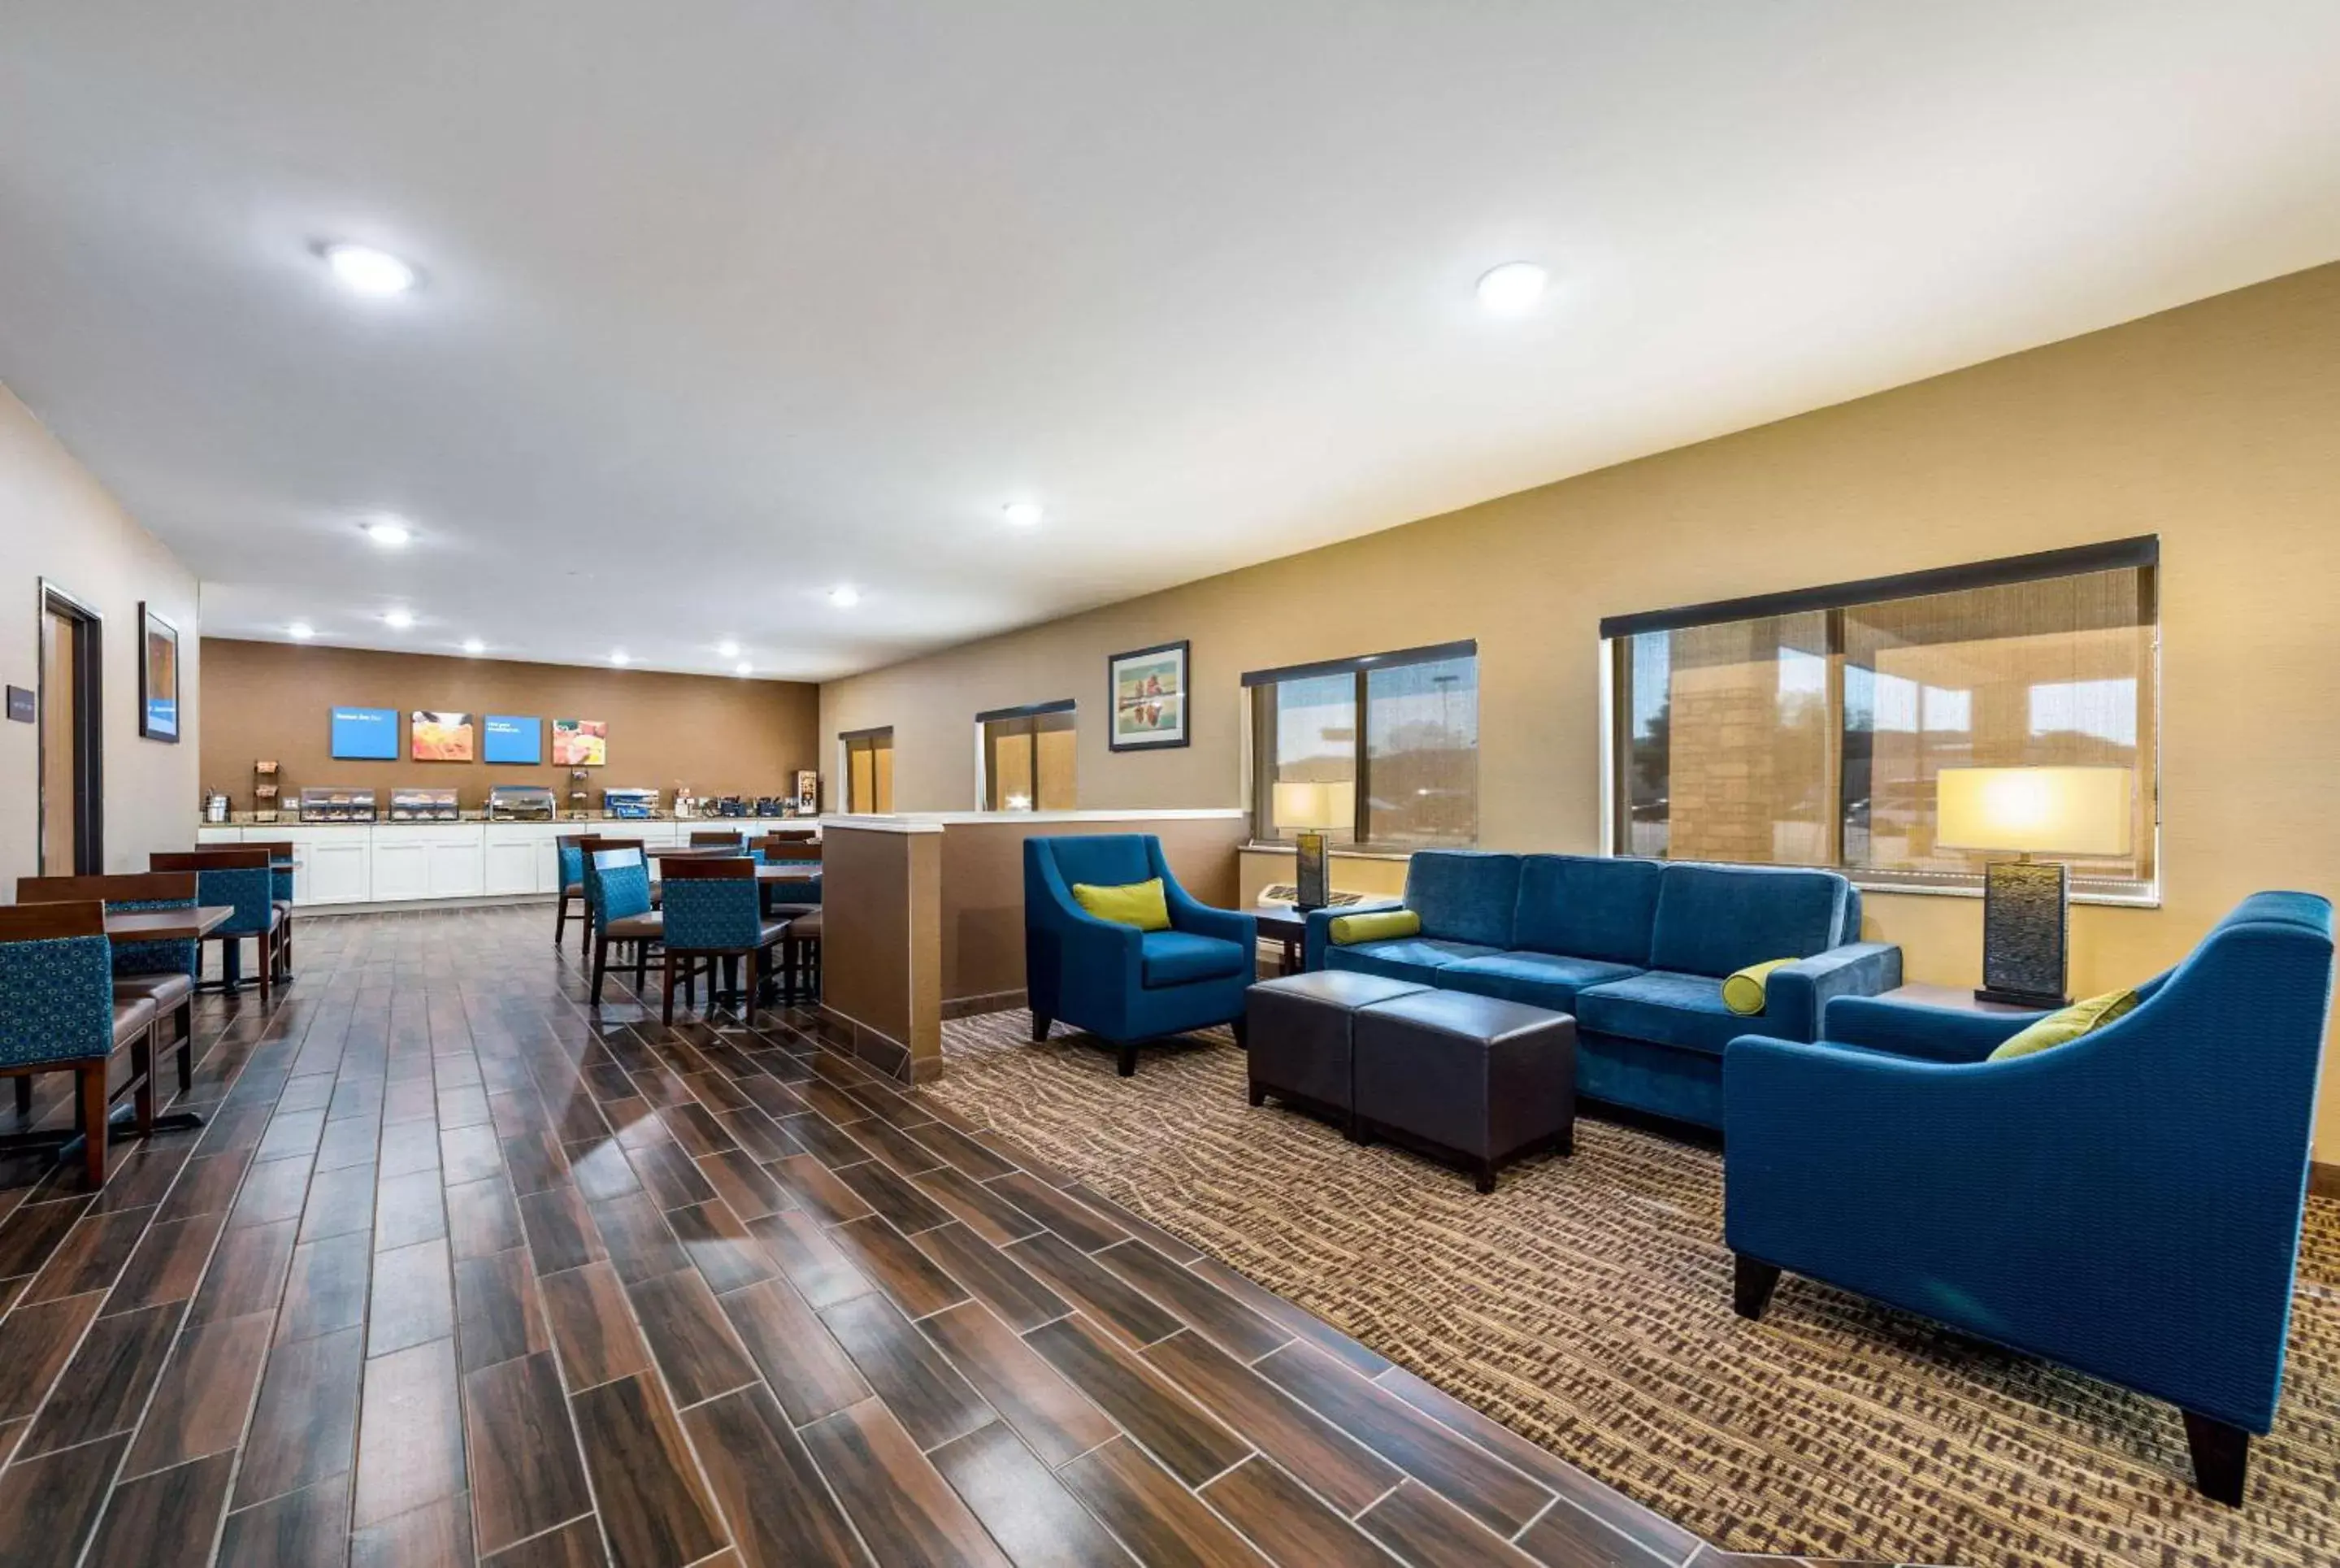 Lobby or reception in Comfort Inn Onalaska - La Crosse Area